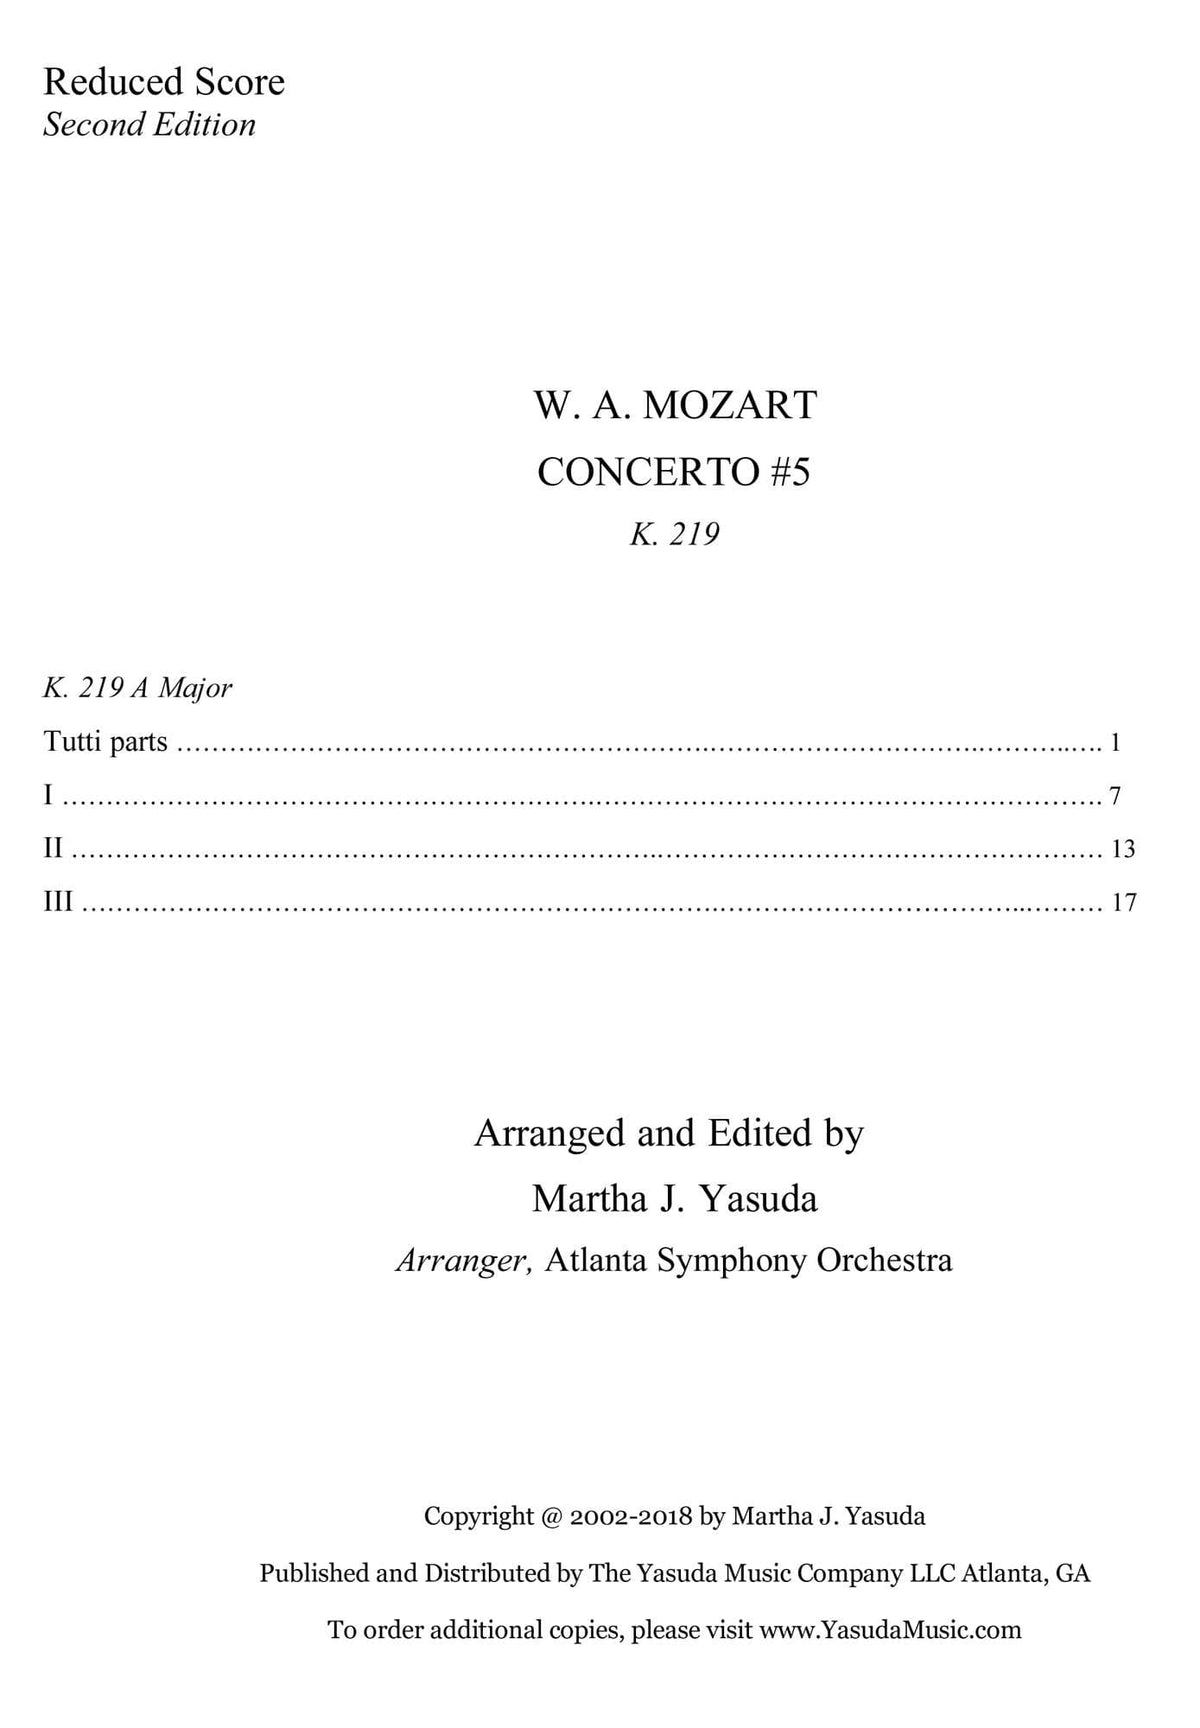 Yasuda, Martha - Mozart Concerti No. 5 for Two or Three Violins - Digital Download